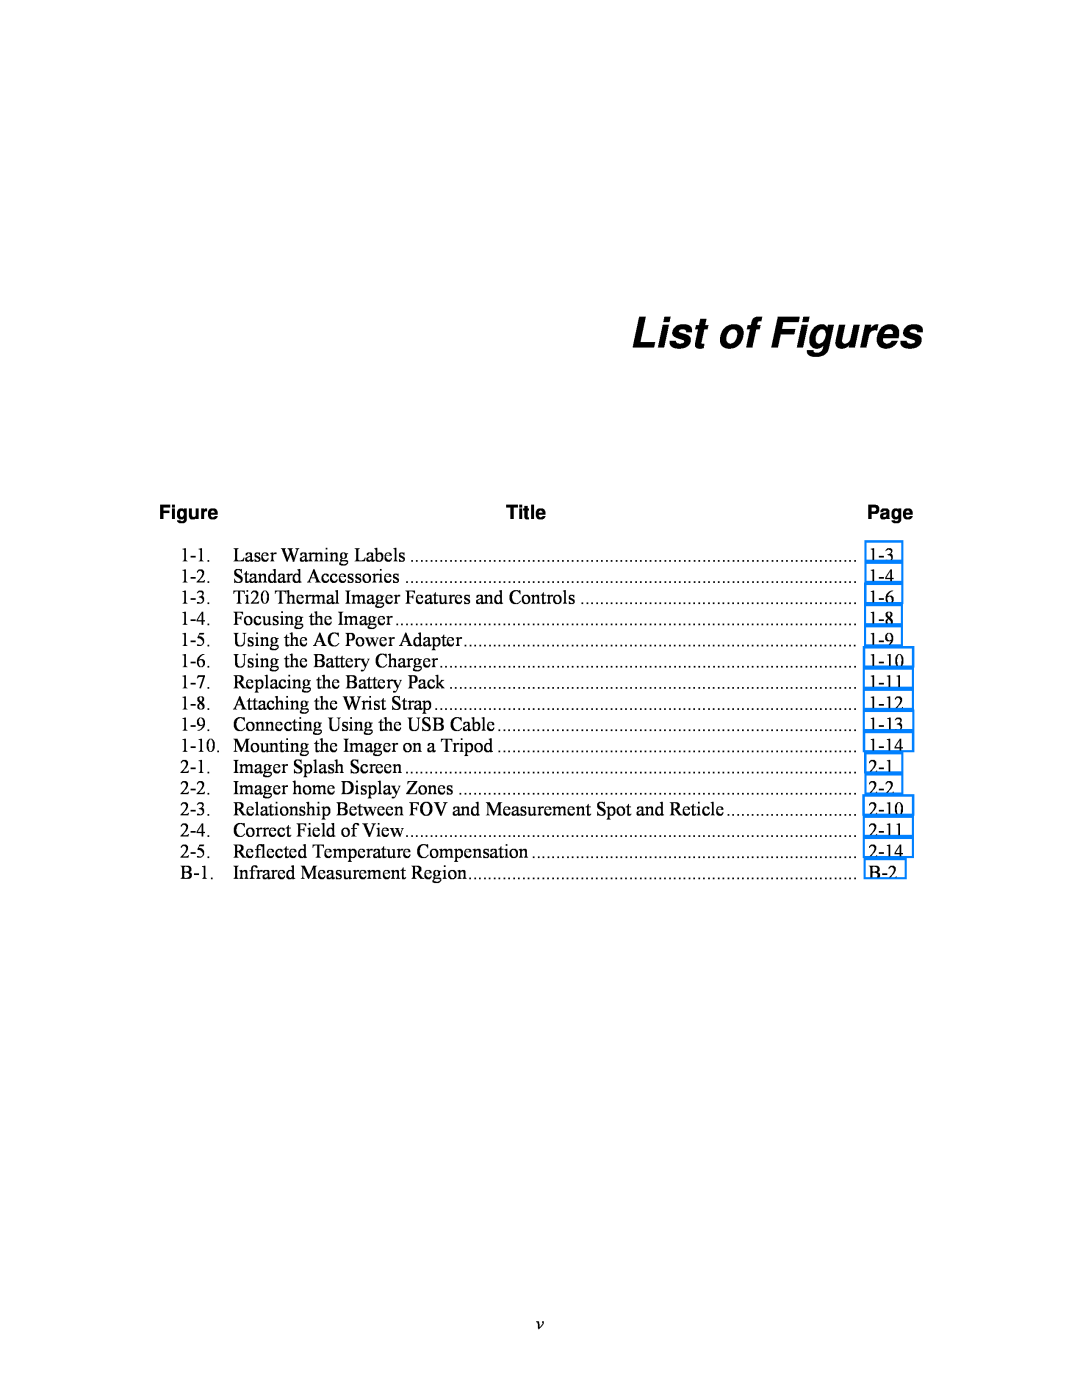 Fluke Ti20 user manual List of Figures, Title 